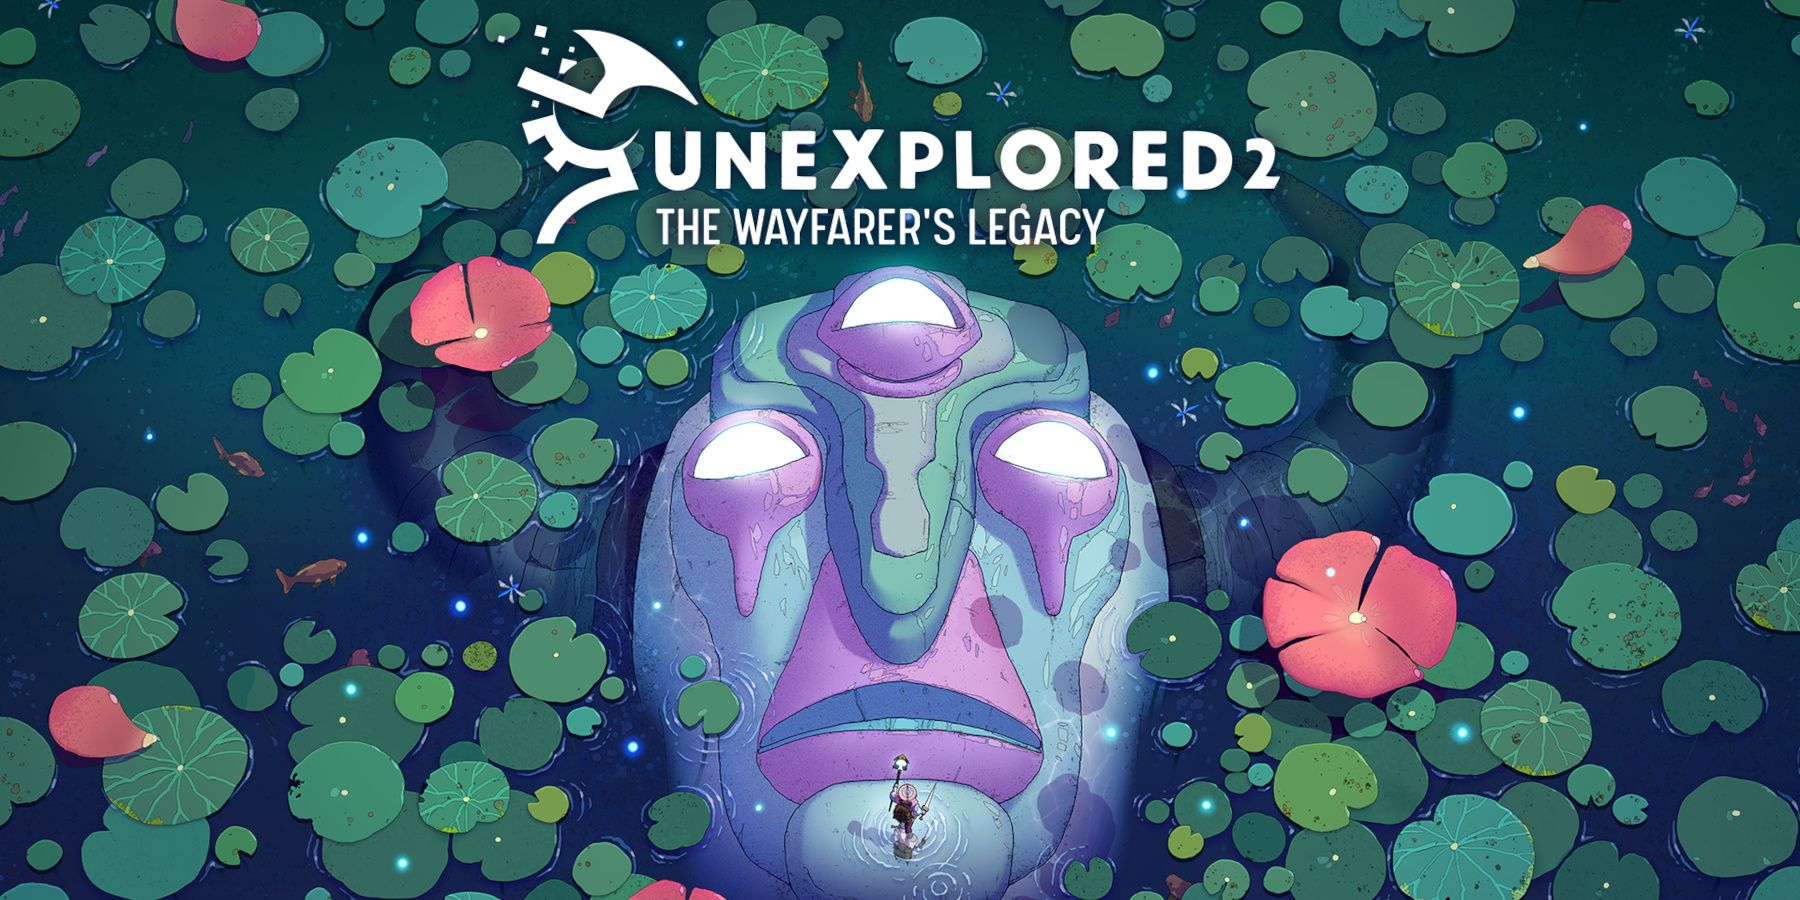 Unexplored 2: The Wayfarer's Legacy Review - Un viaje de juego de rol Roguelike